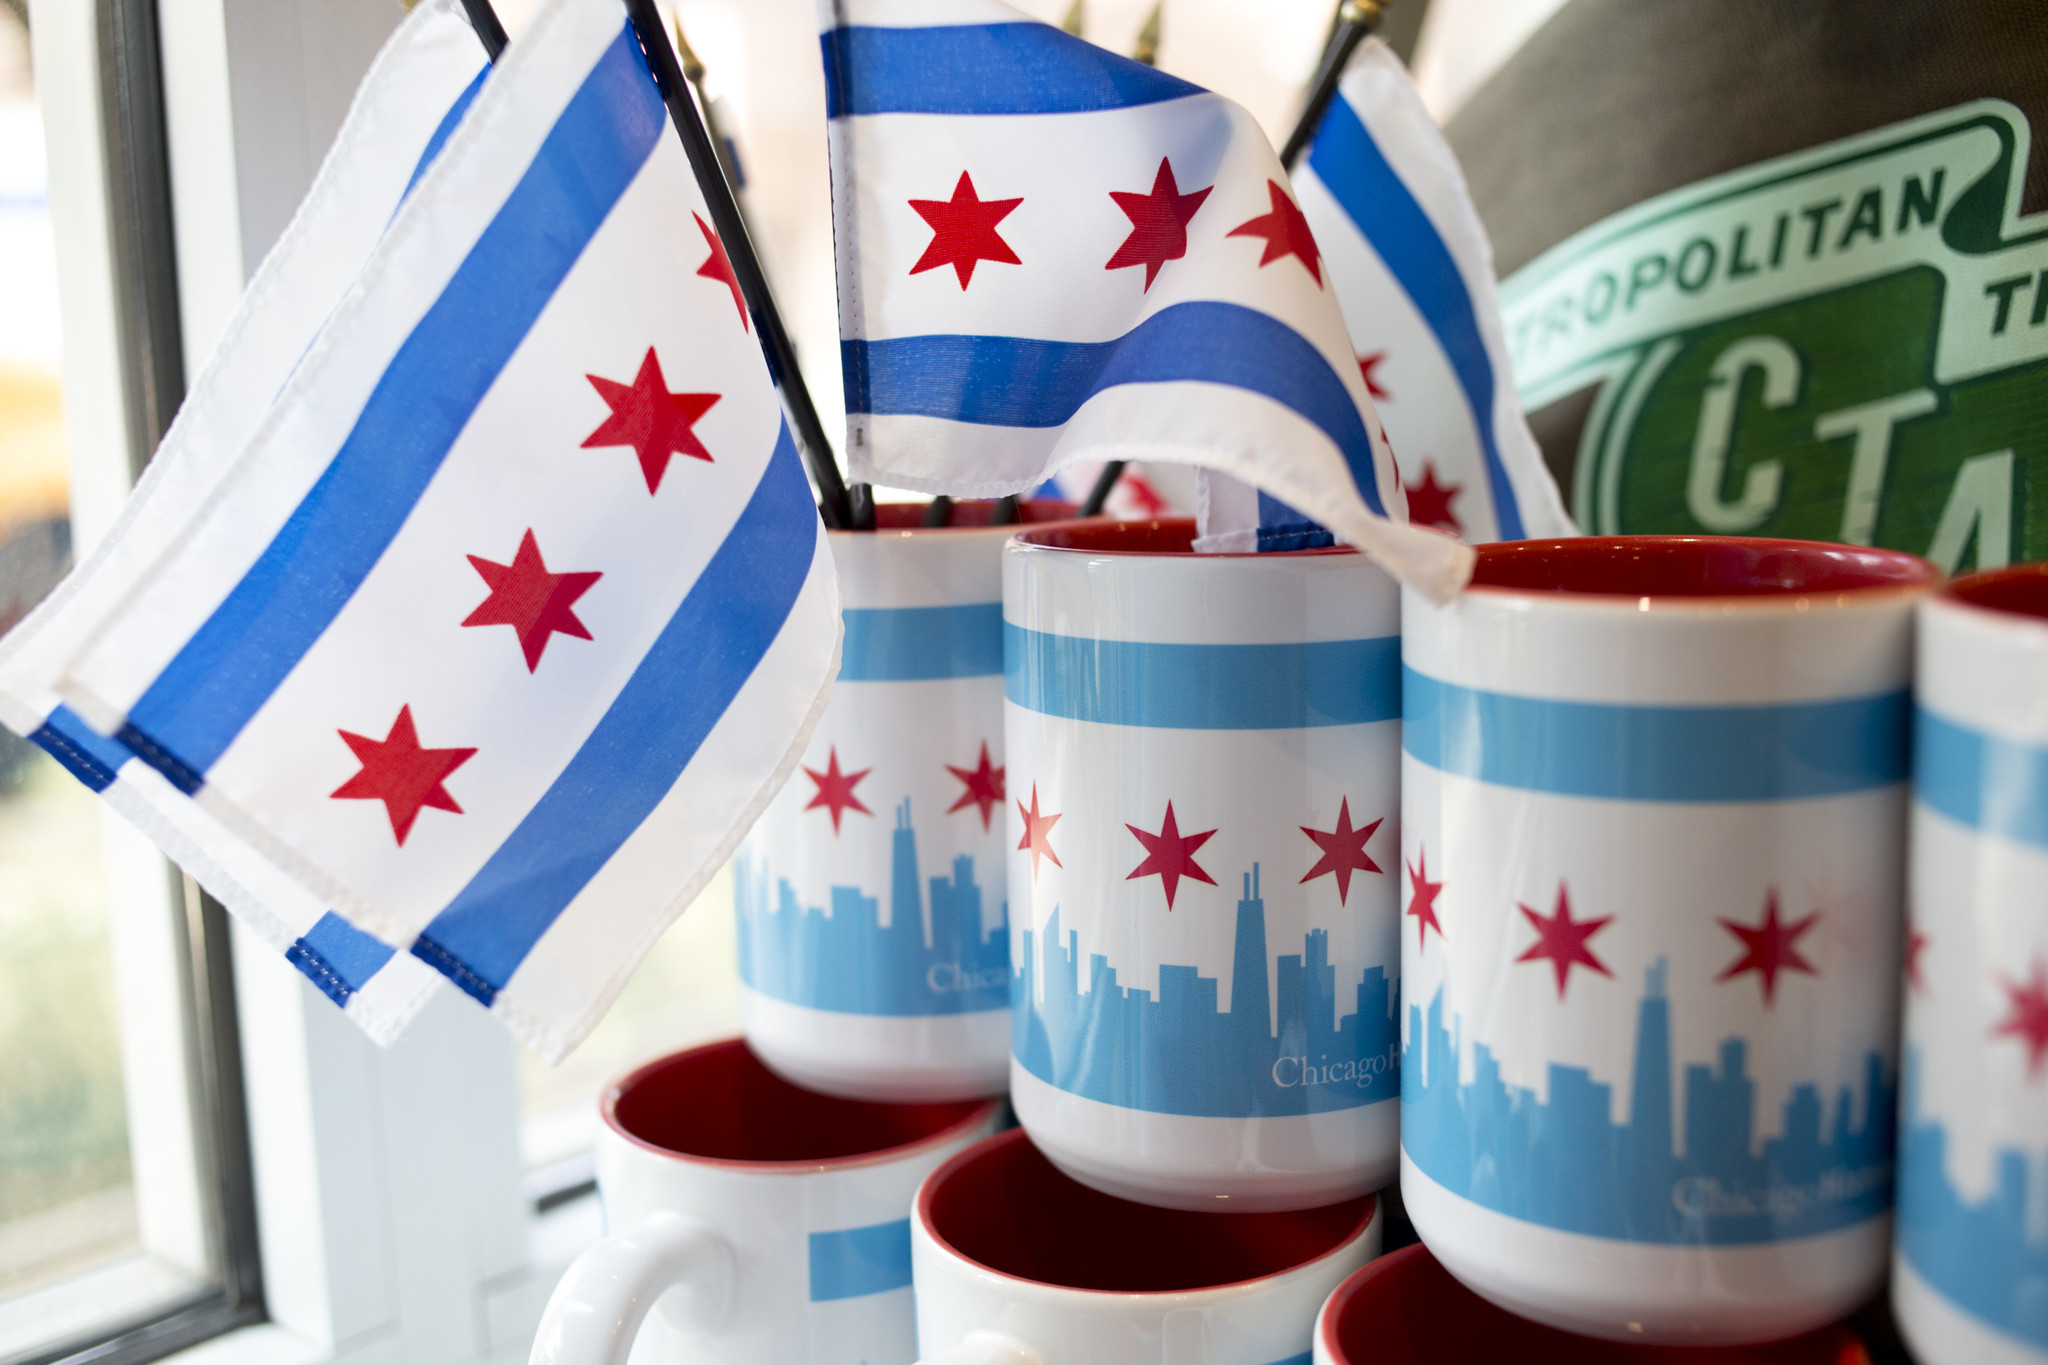 History of the Chicago flag - Chicago Tribune